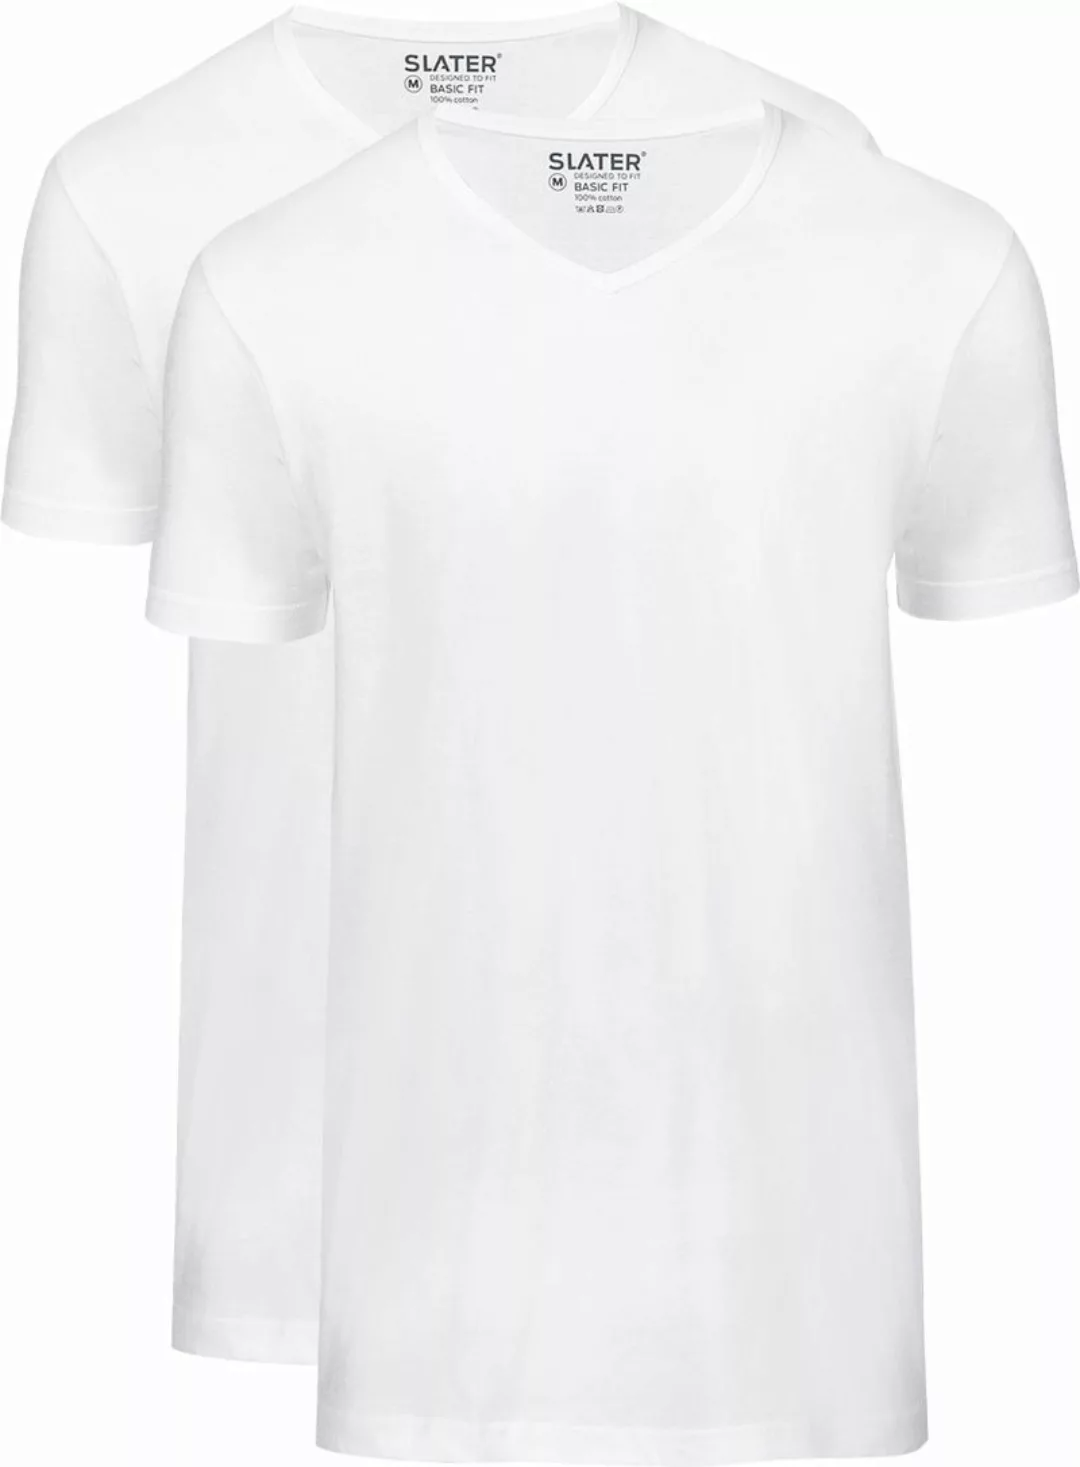 Slater 2er-Pack Basic Fit T-shirt V-Ausschnitt Weiß - Größe 3XL günstig online kaufen